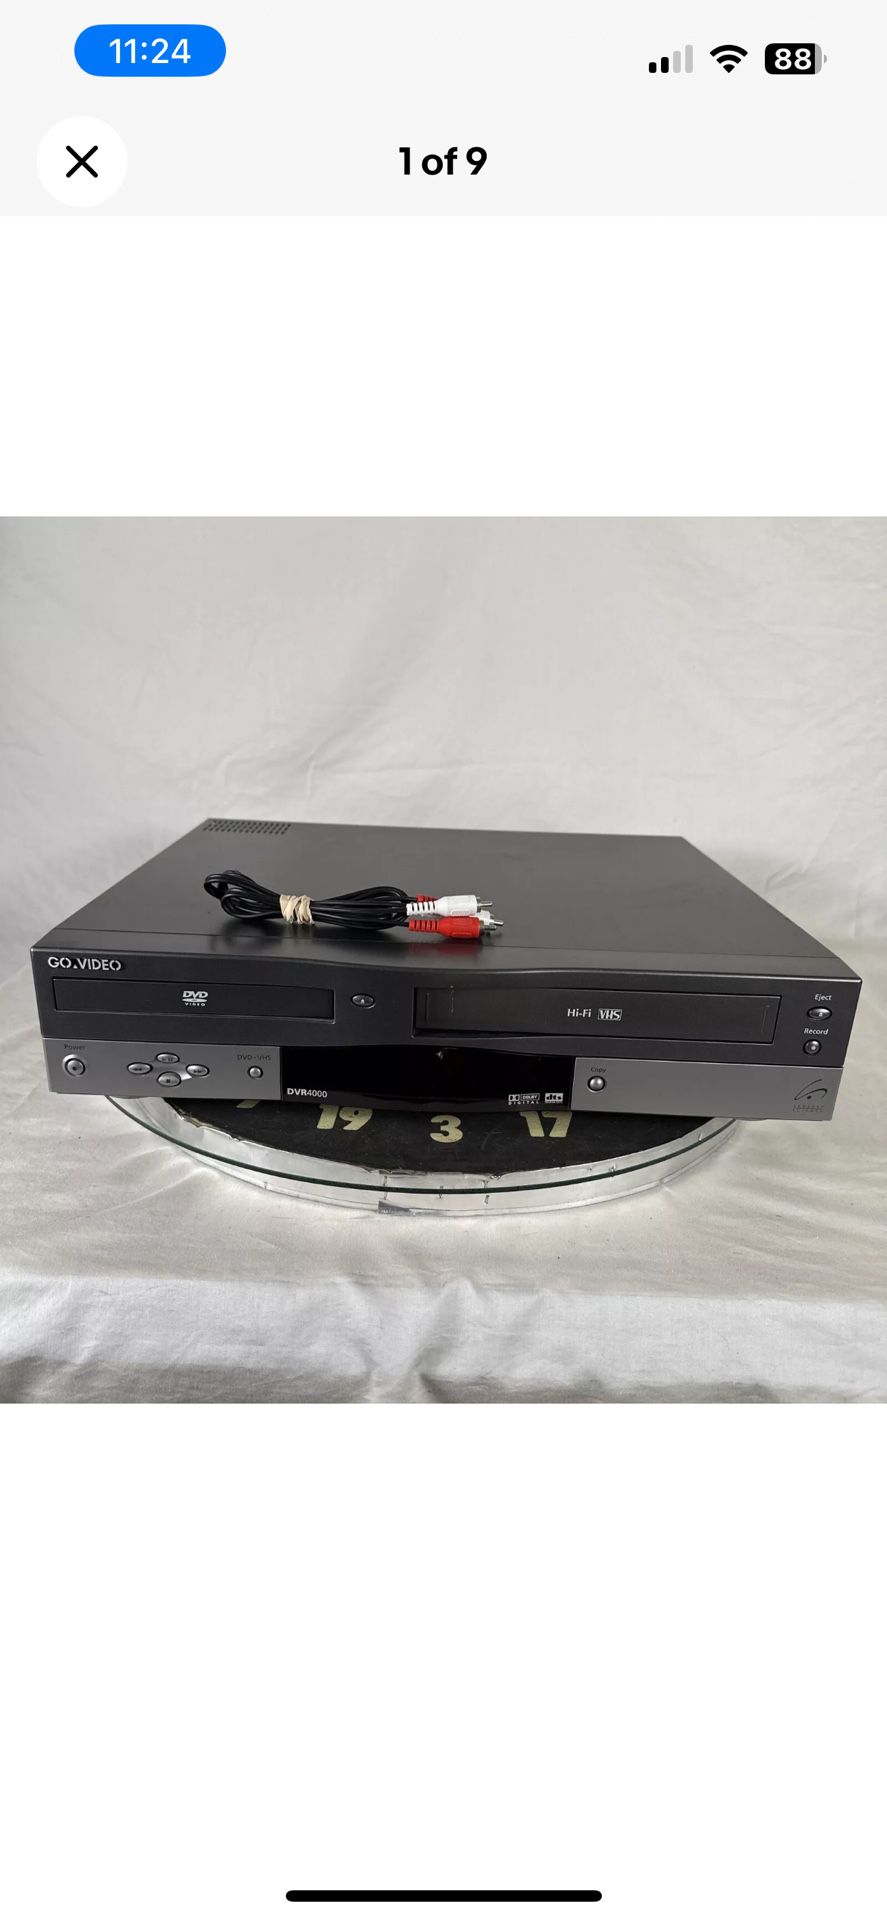 https://offerup.com/redirect/?o=R08uVklERU8= Model DVR4000 VCR Video Cassette Recorder VHS/DVD Combo Player *Tested*